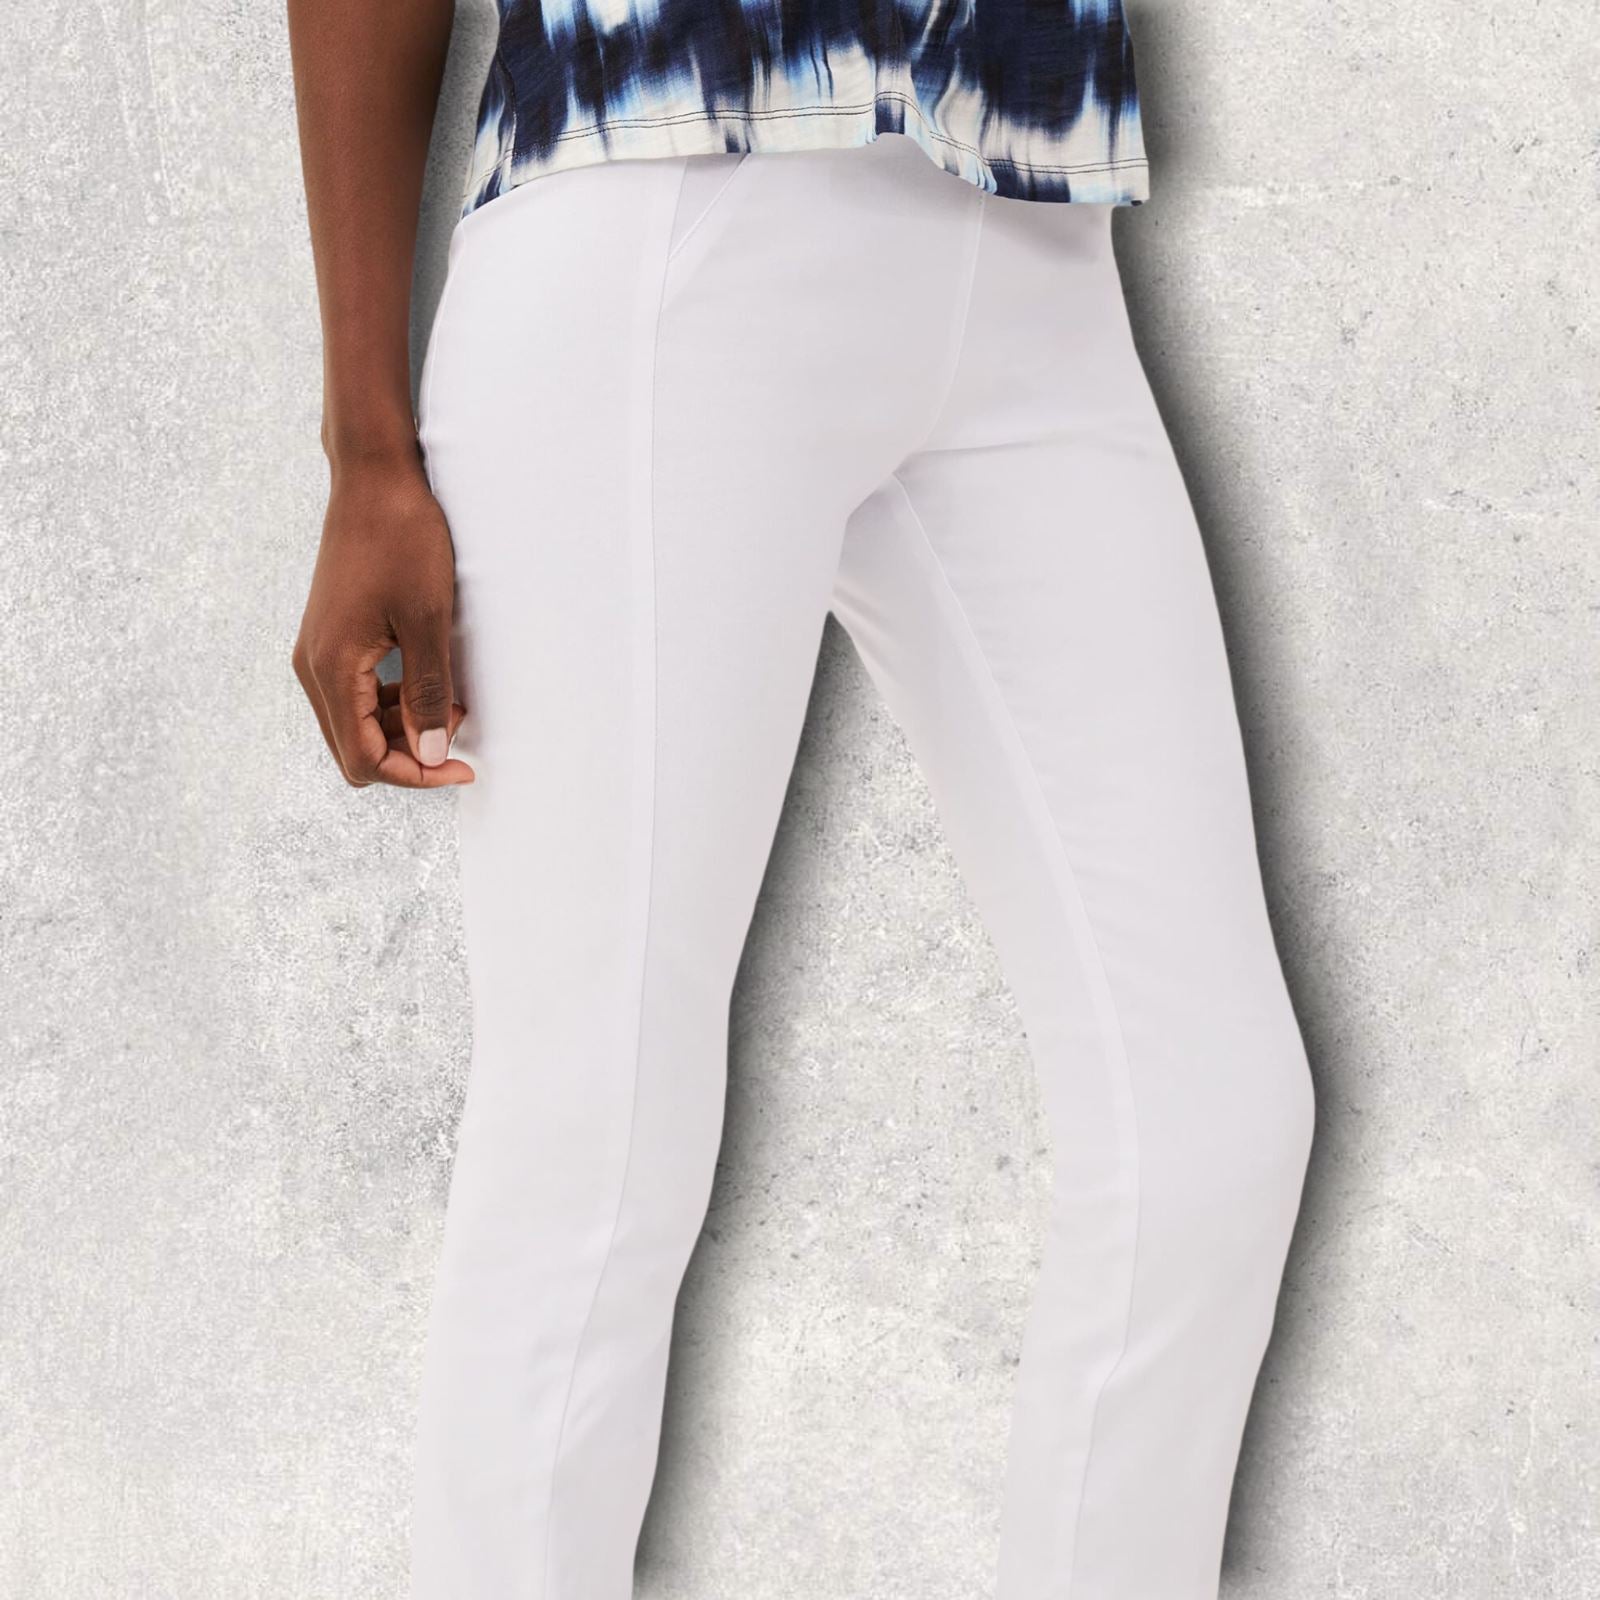 Libra White Cotton Summer Cropped Trousers UK 10 US 6 EU 38 RRP £89.95 BNWT Timeless Fashions